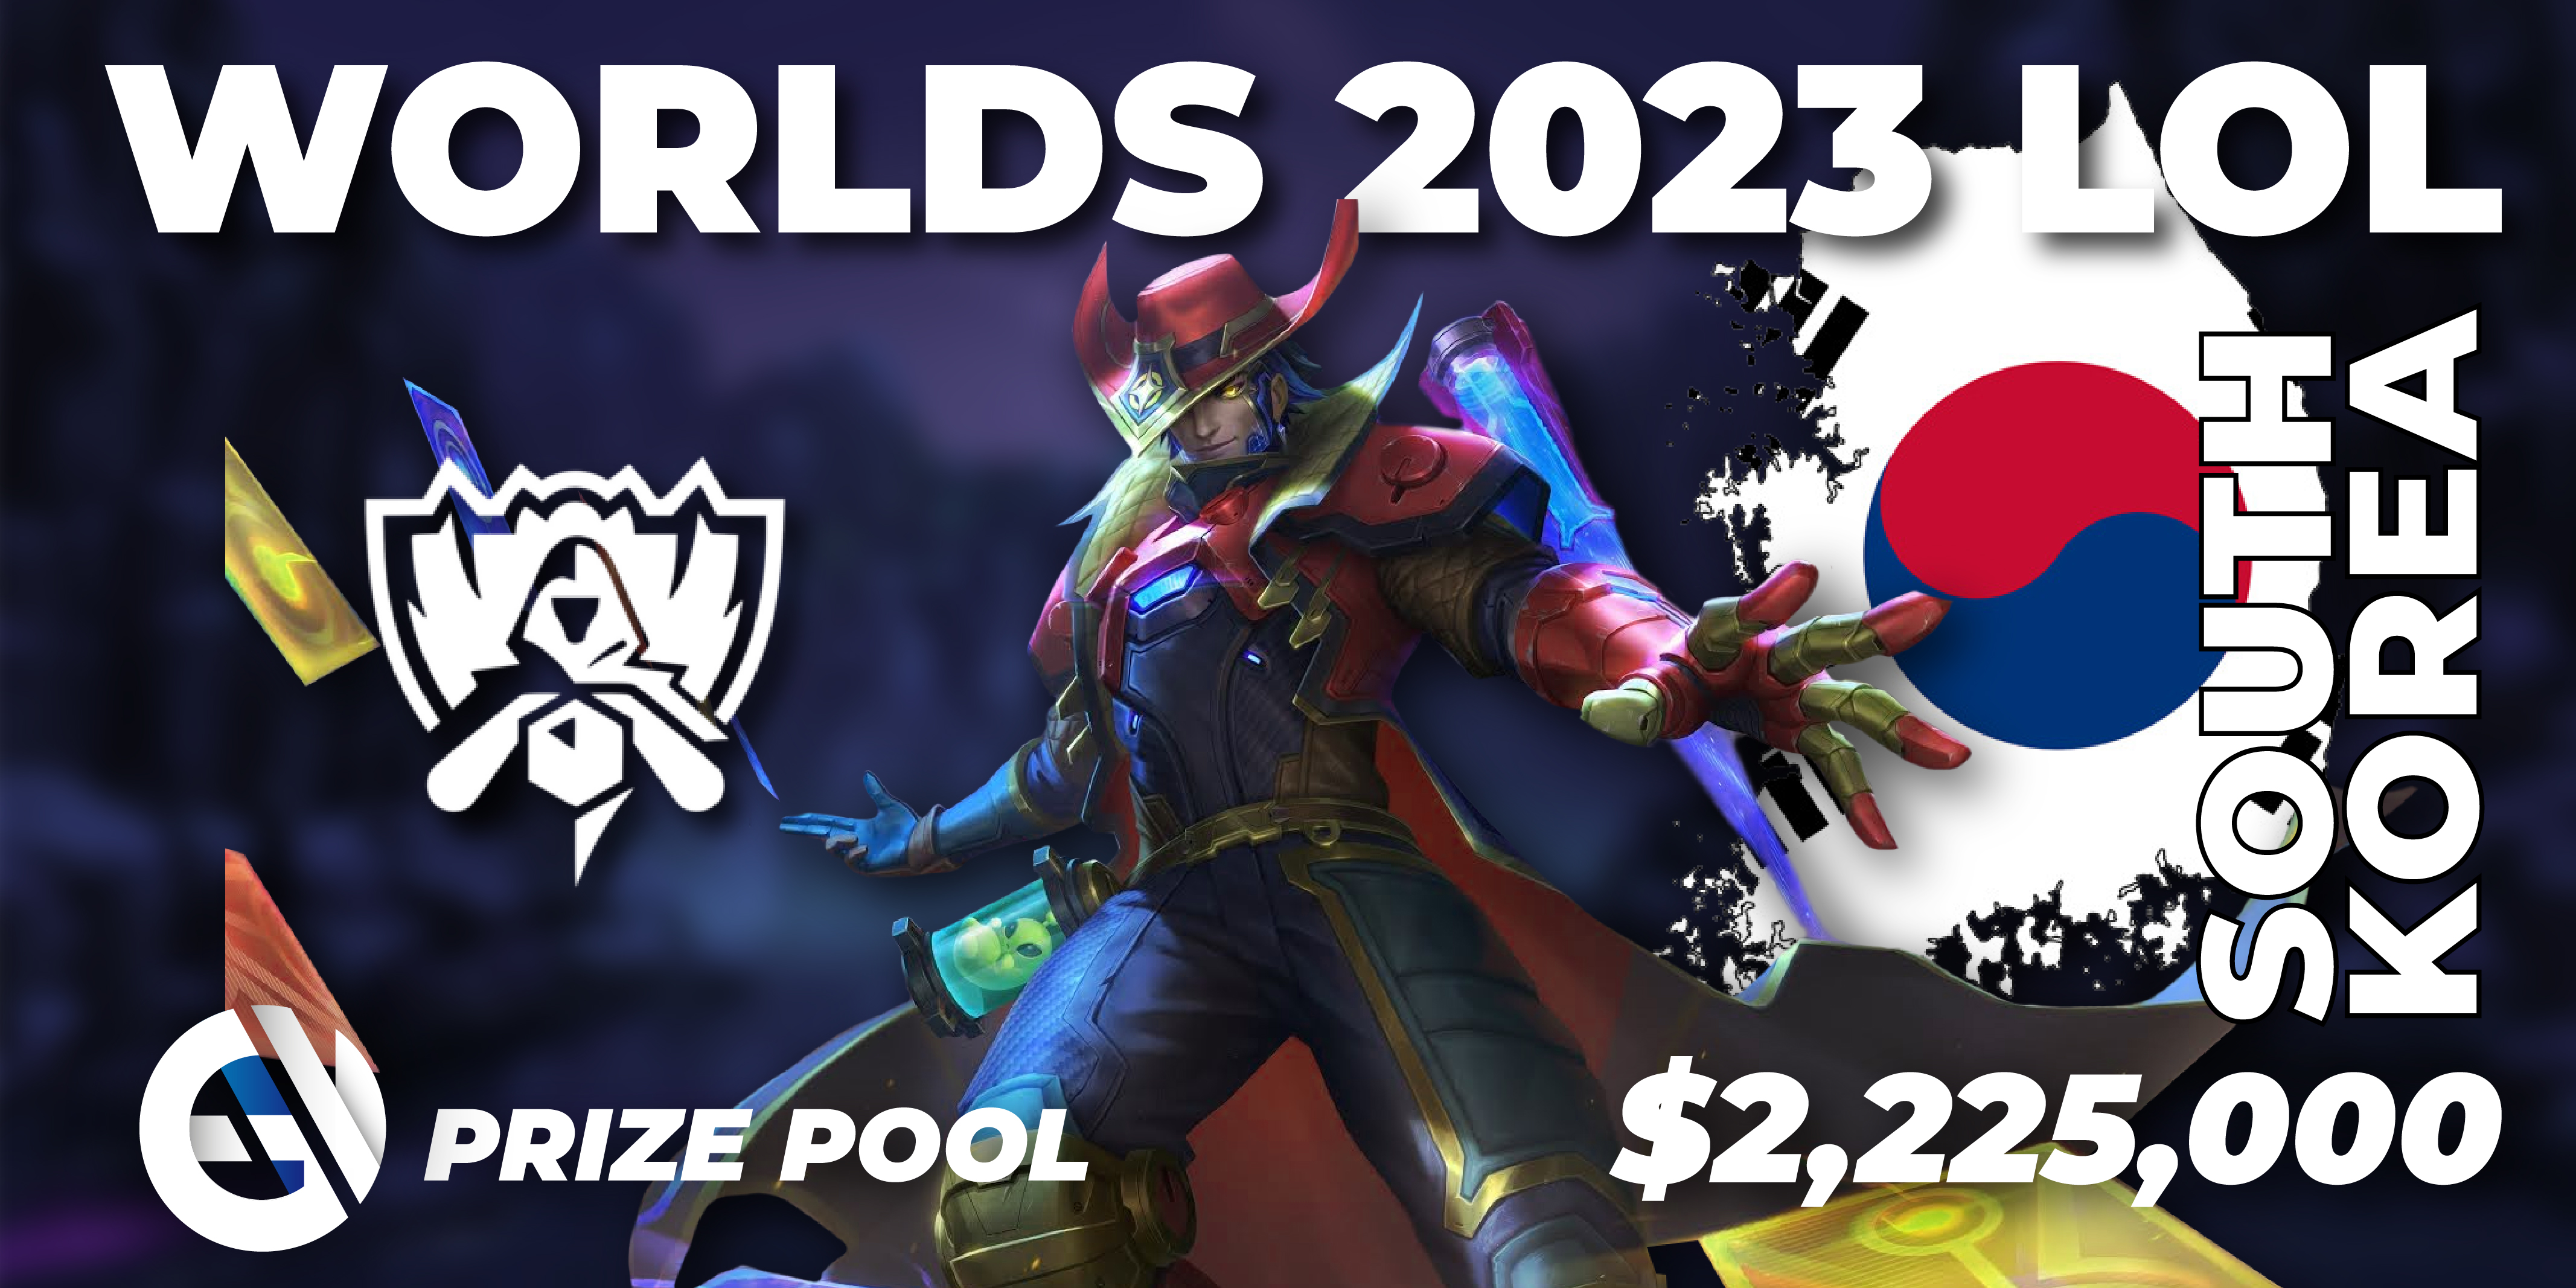 LoL Worlds 2023 World Championship Started